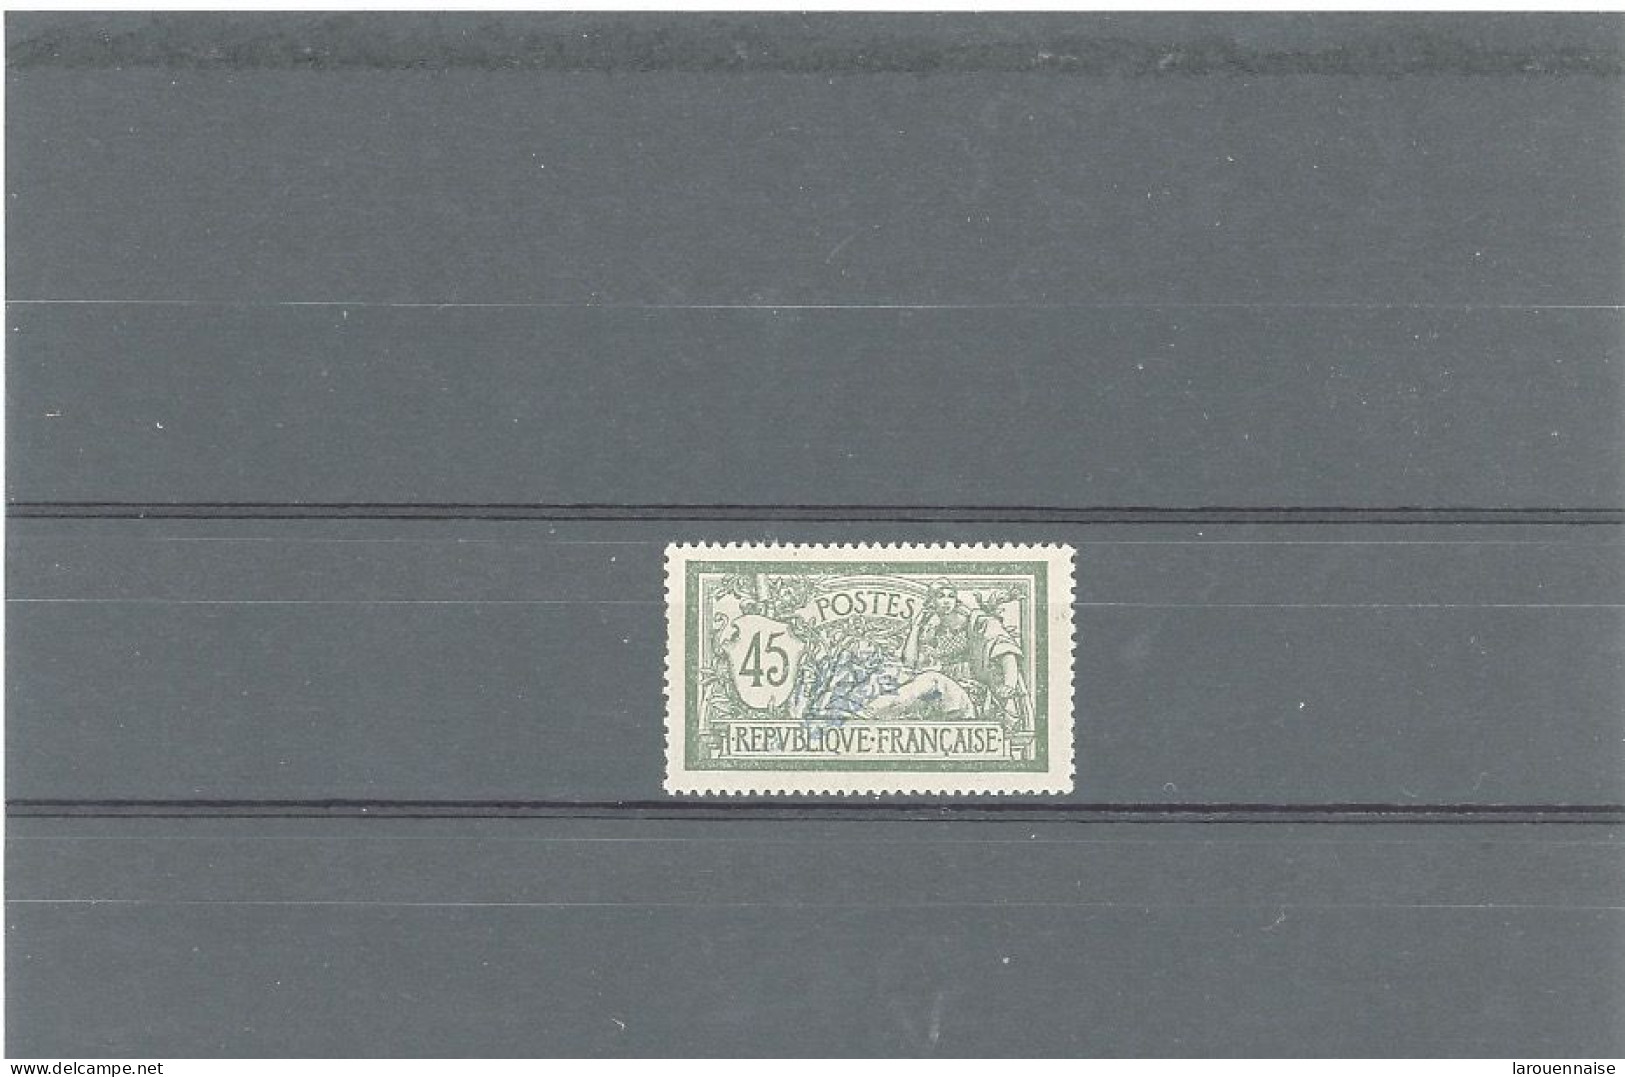 MERSON -N° 143 N** PAPIER G C  - CENTRE DEPLACE (SUD OUEST )CENTRAGE SUPERBE - Unused Stamps